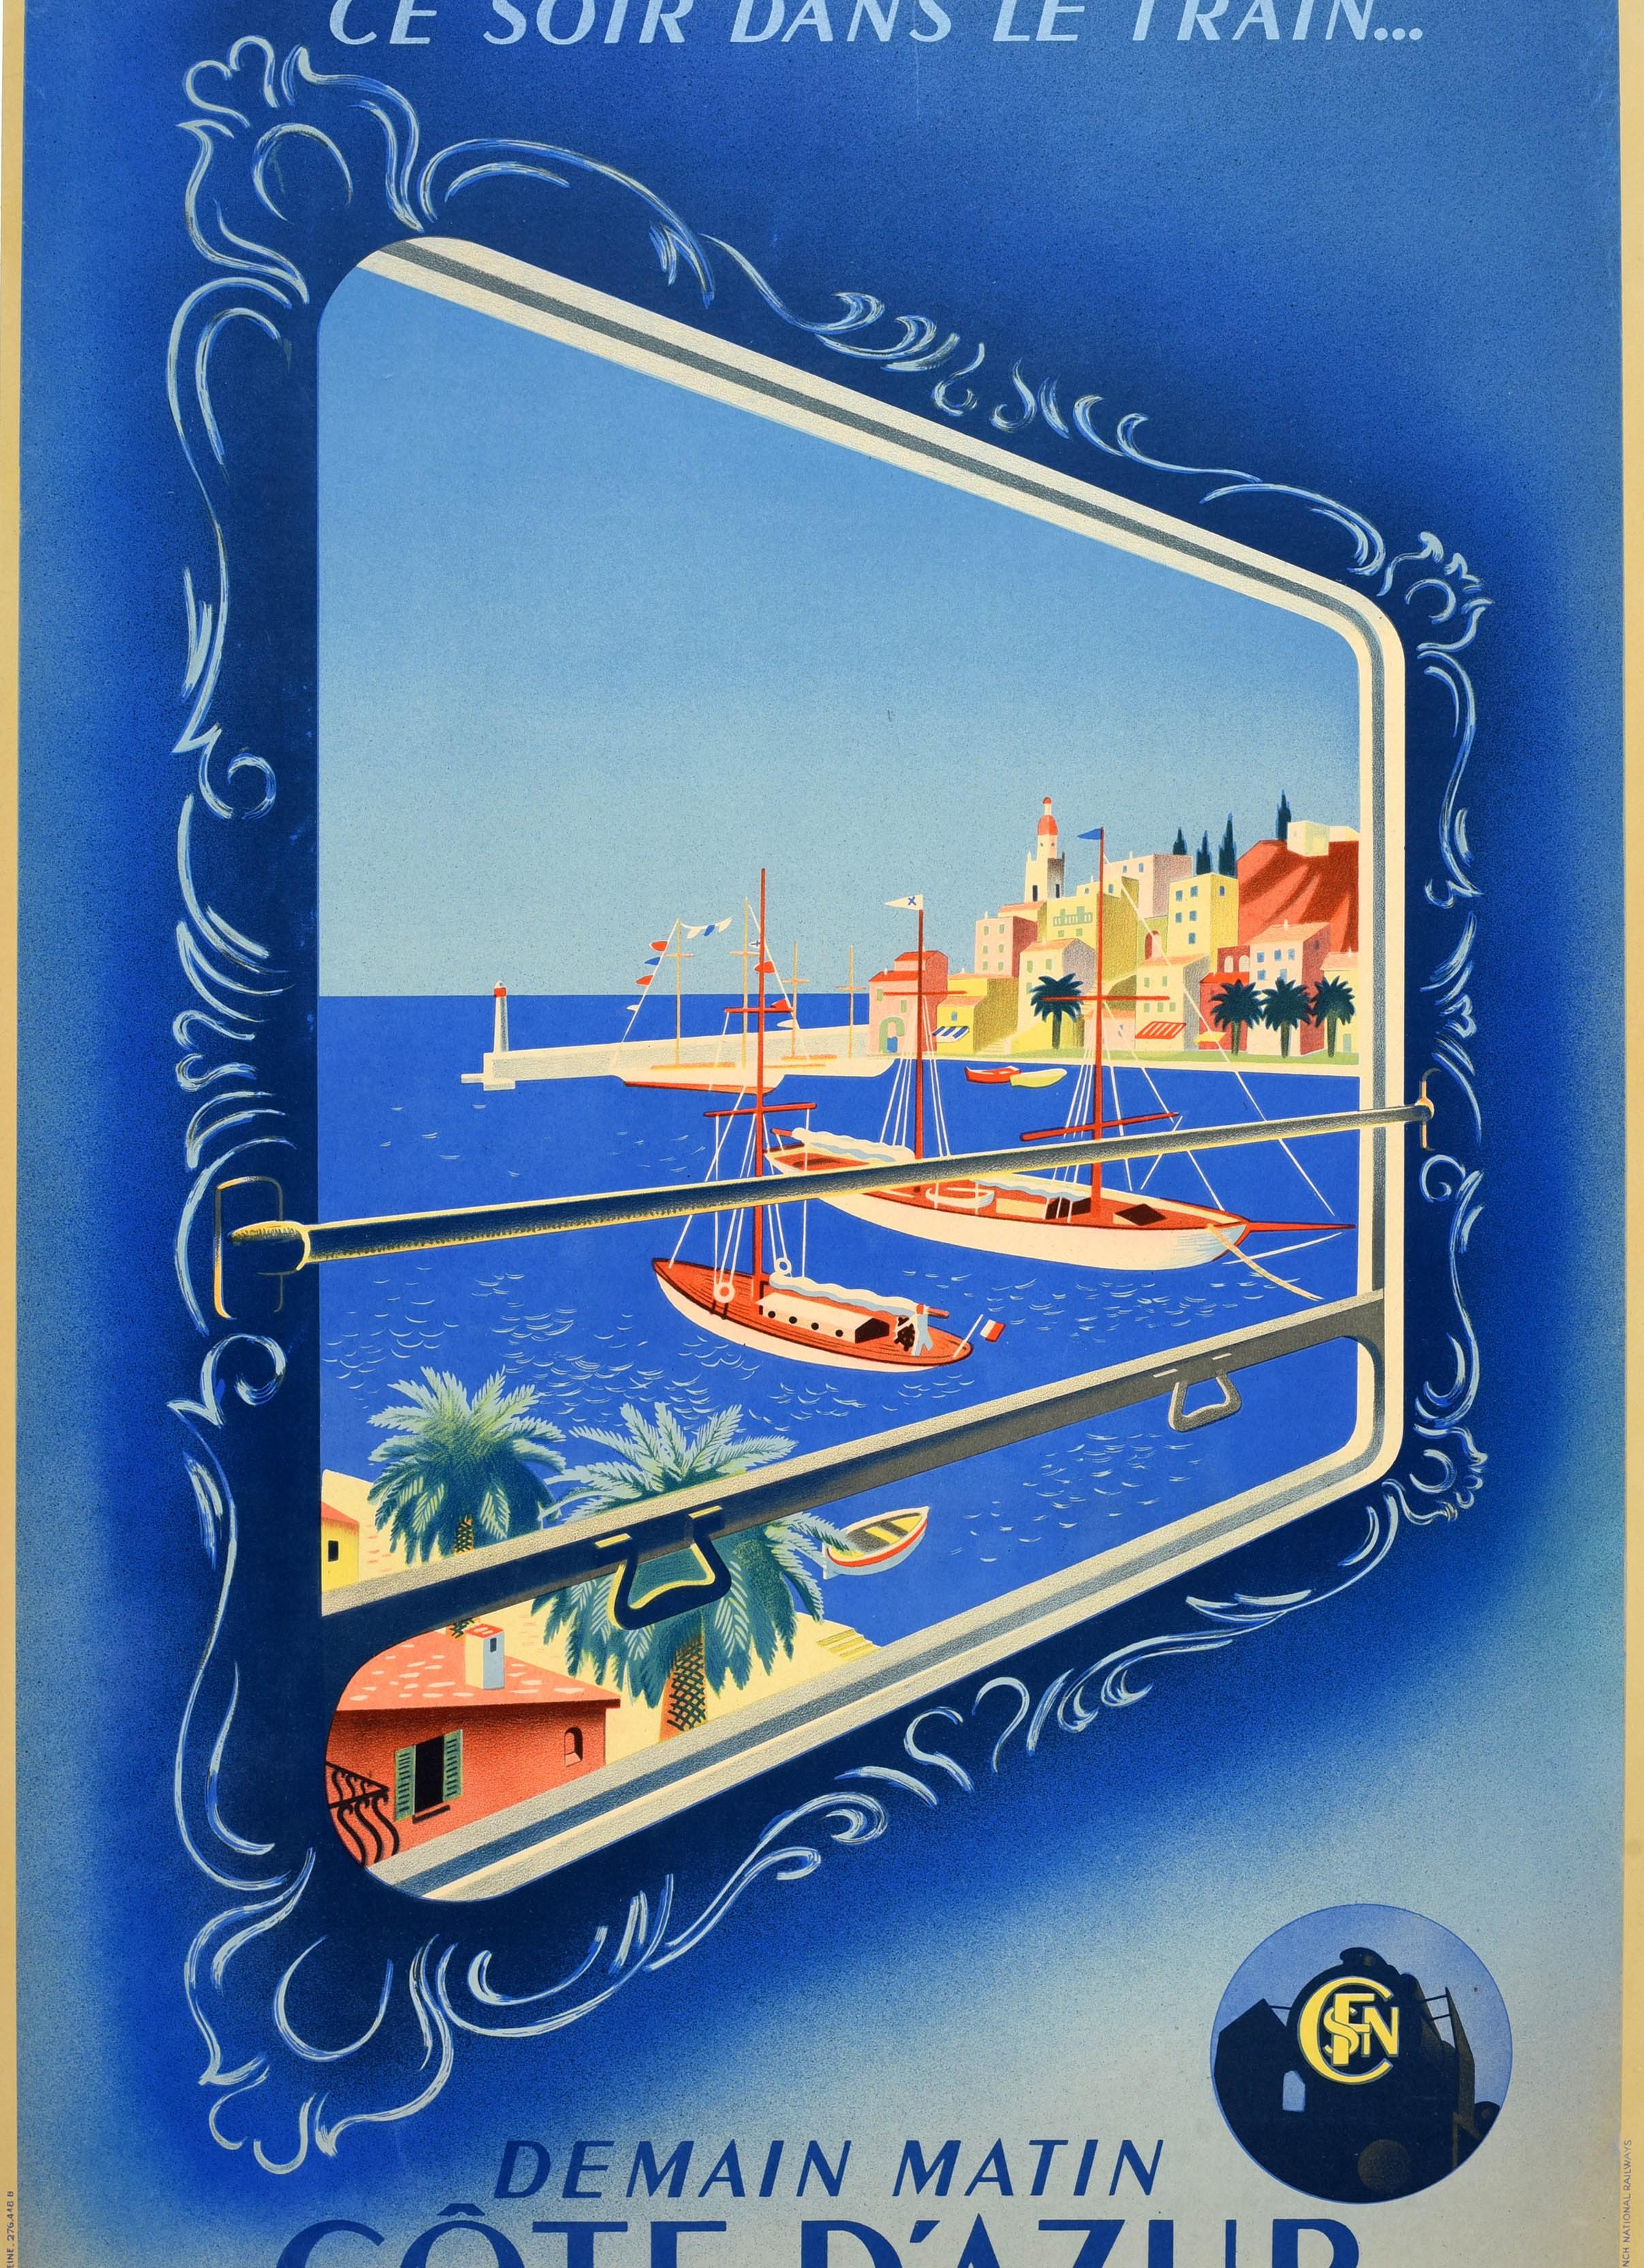 Original Vintage Railway Poster Ce Soir Dans Le Train Cote D'azur French Riviera In Good Condition For Sale In London, GB